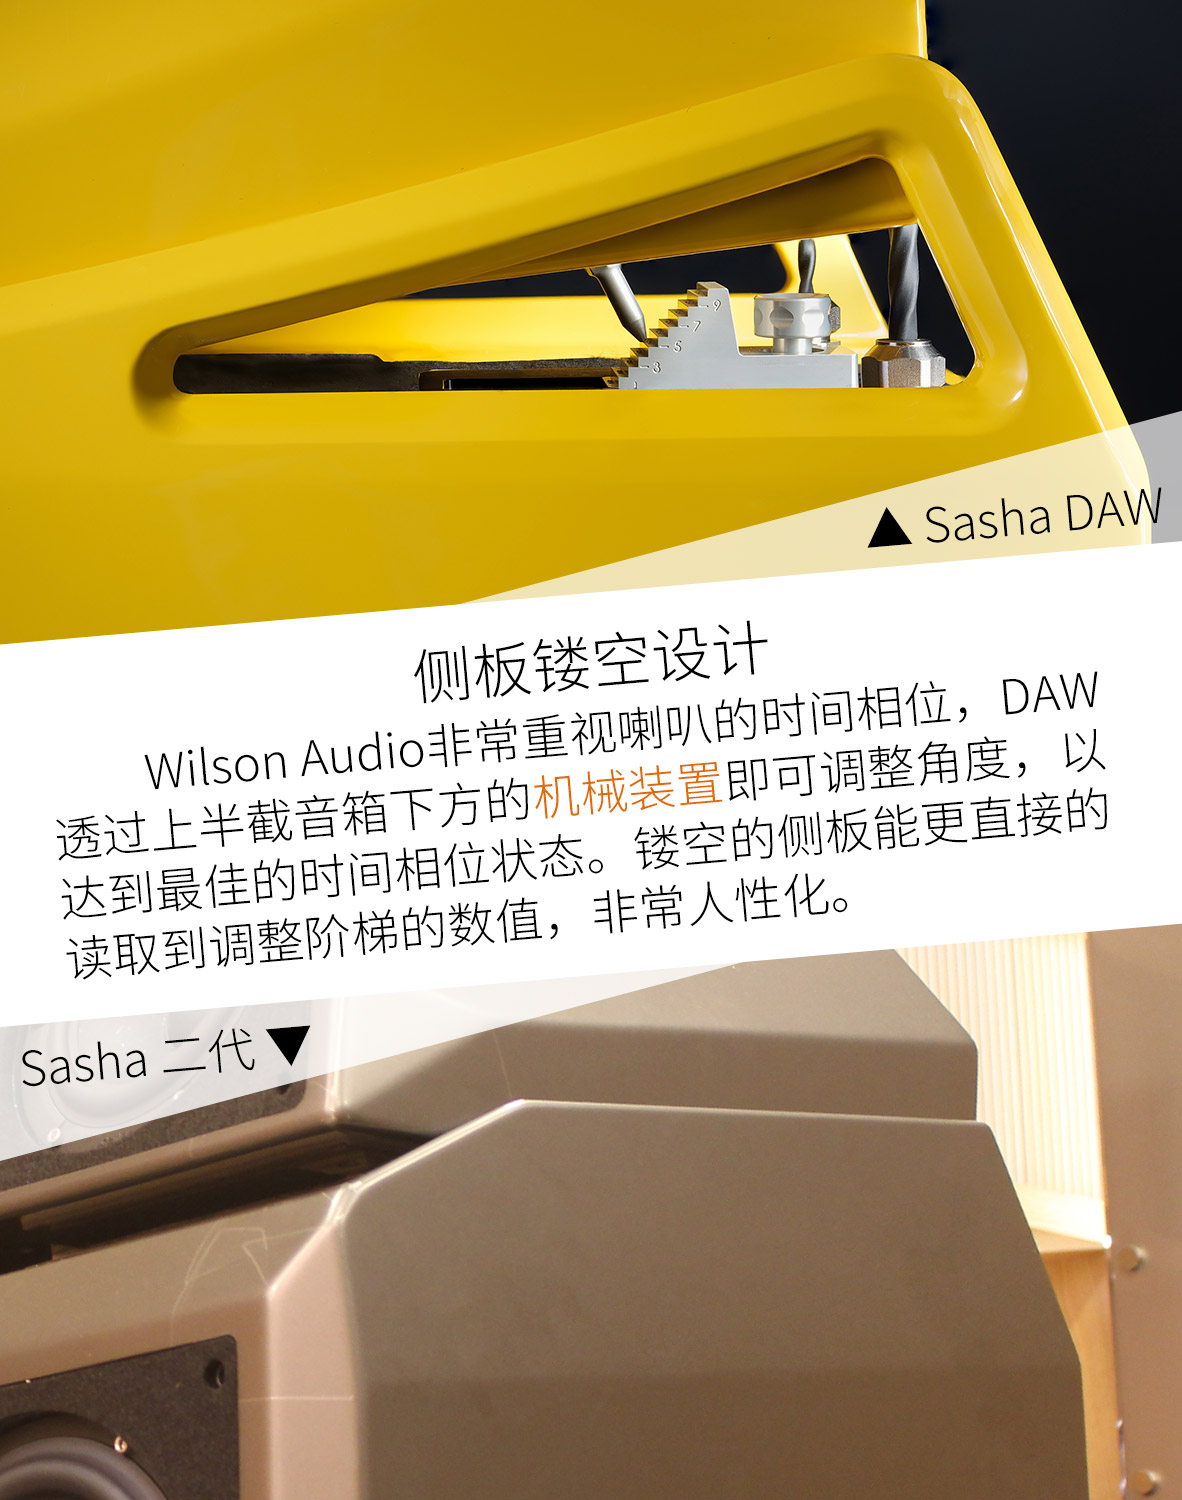 Wilson Audio Sasha DA